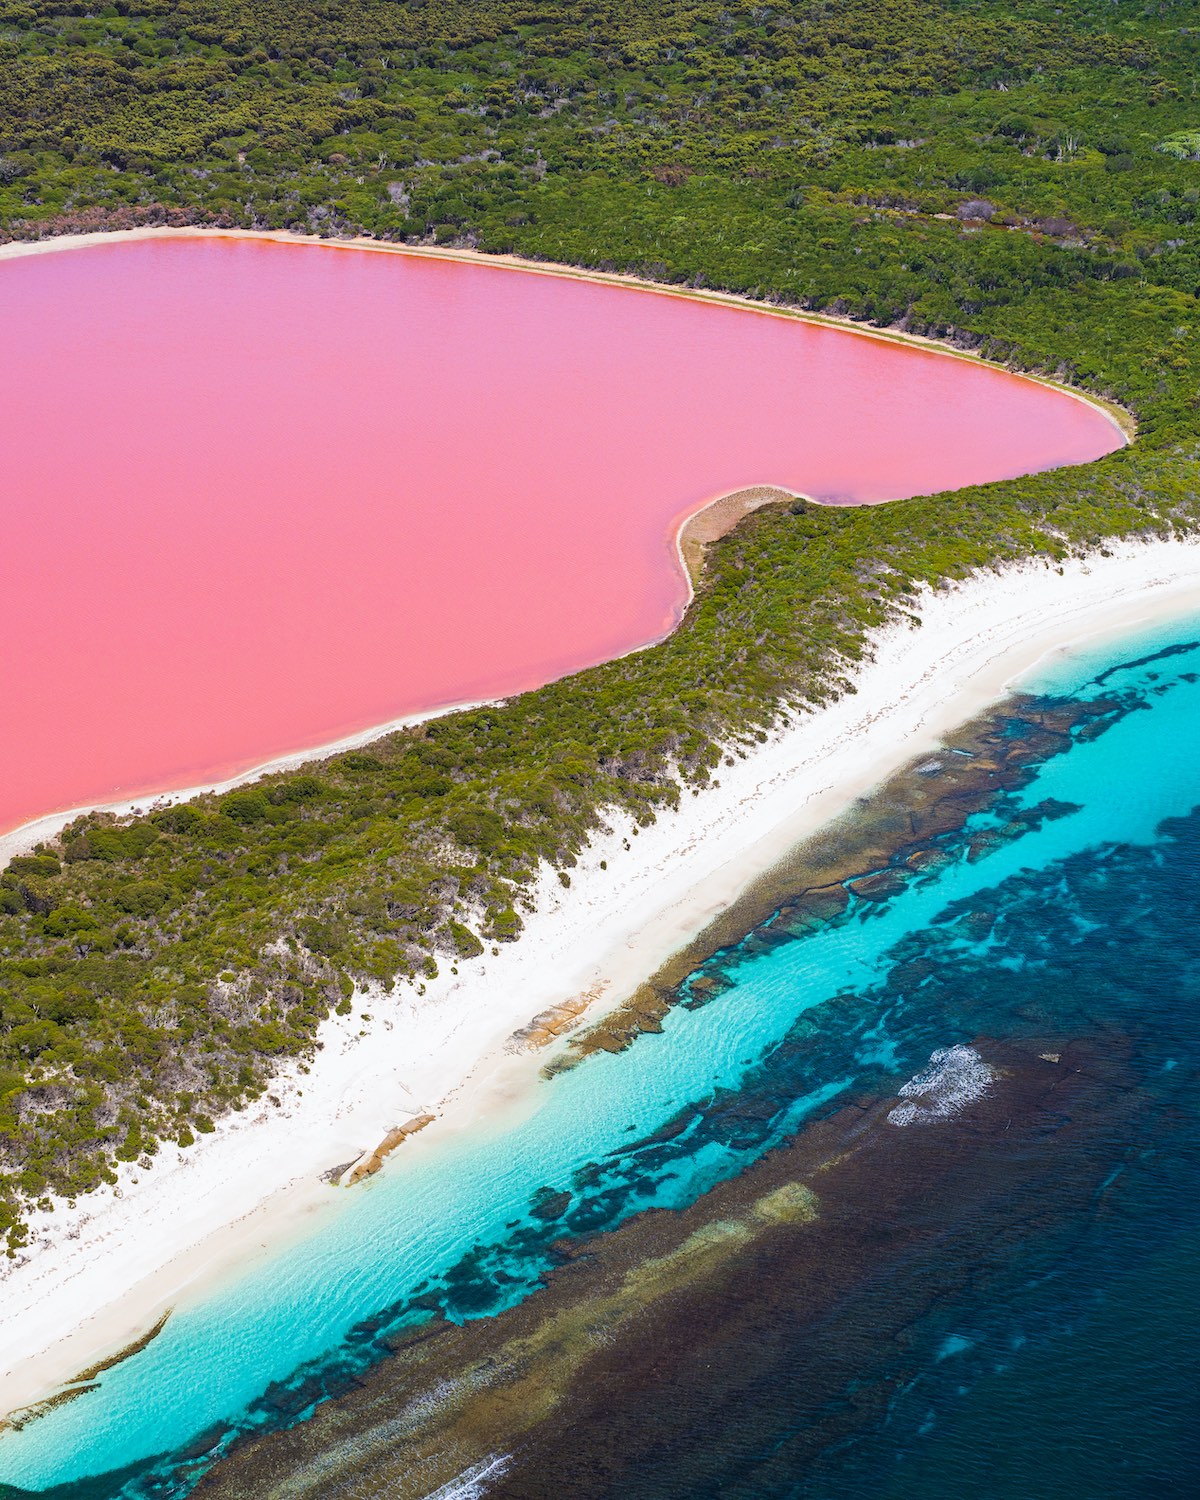 Lake Hillier, Esperance. A unforgettable pink lake next to a beach on an island.